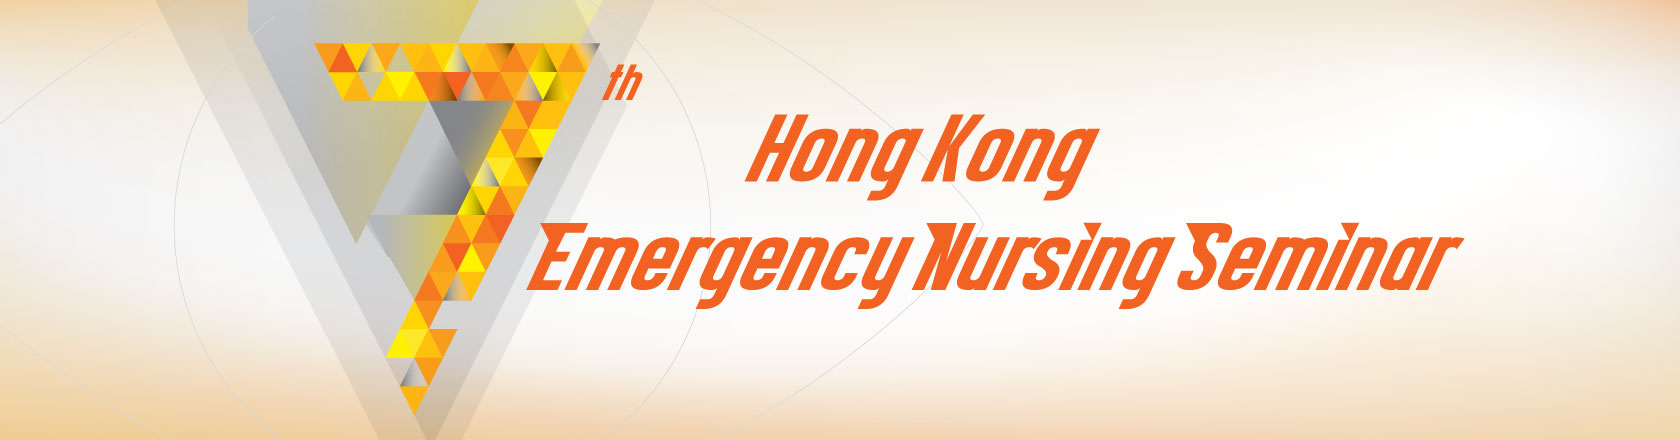 7th Hong Kong Emergency Nursing Seminar